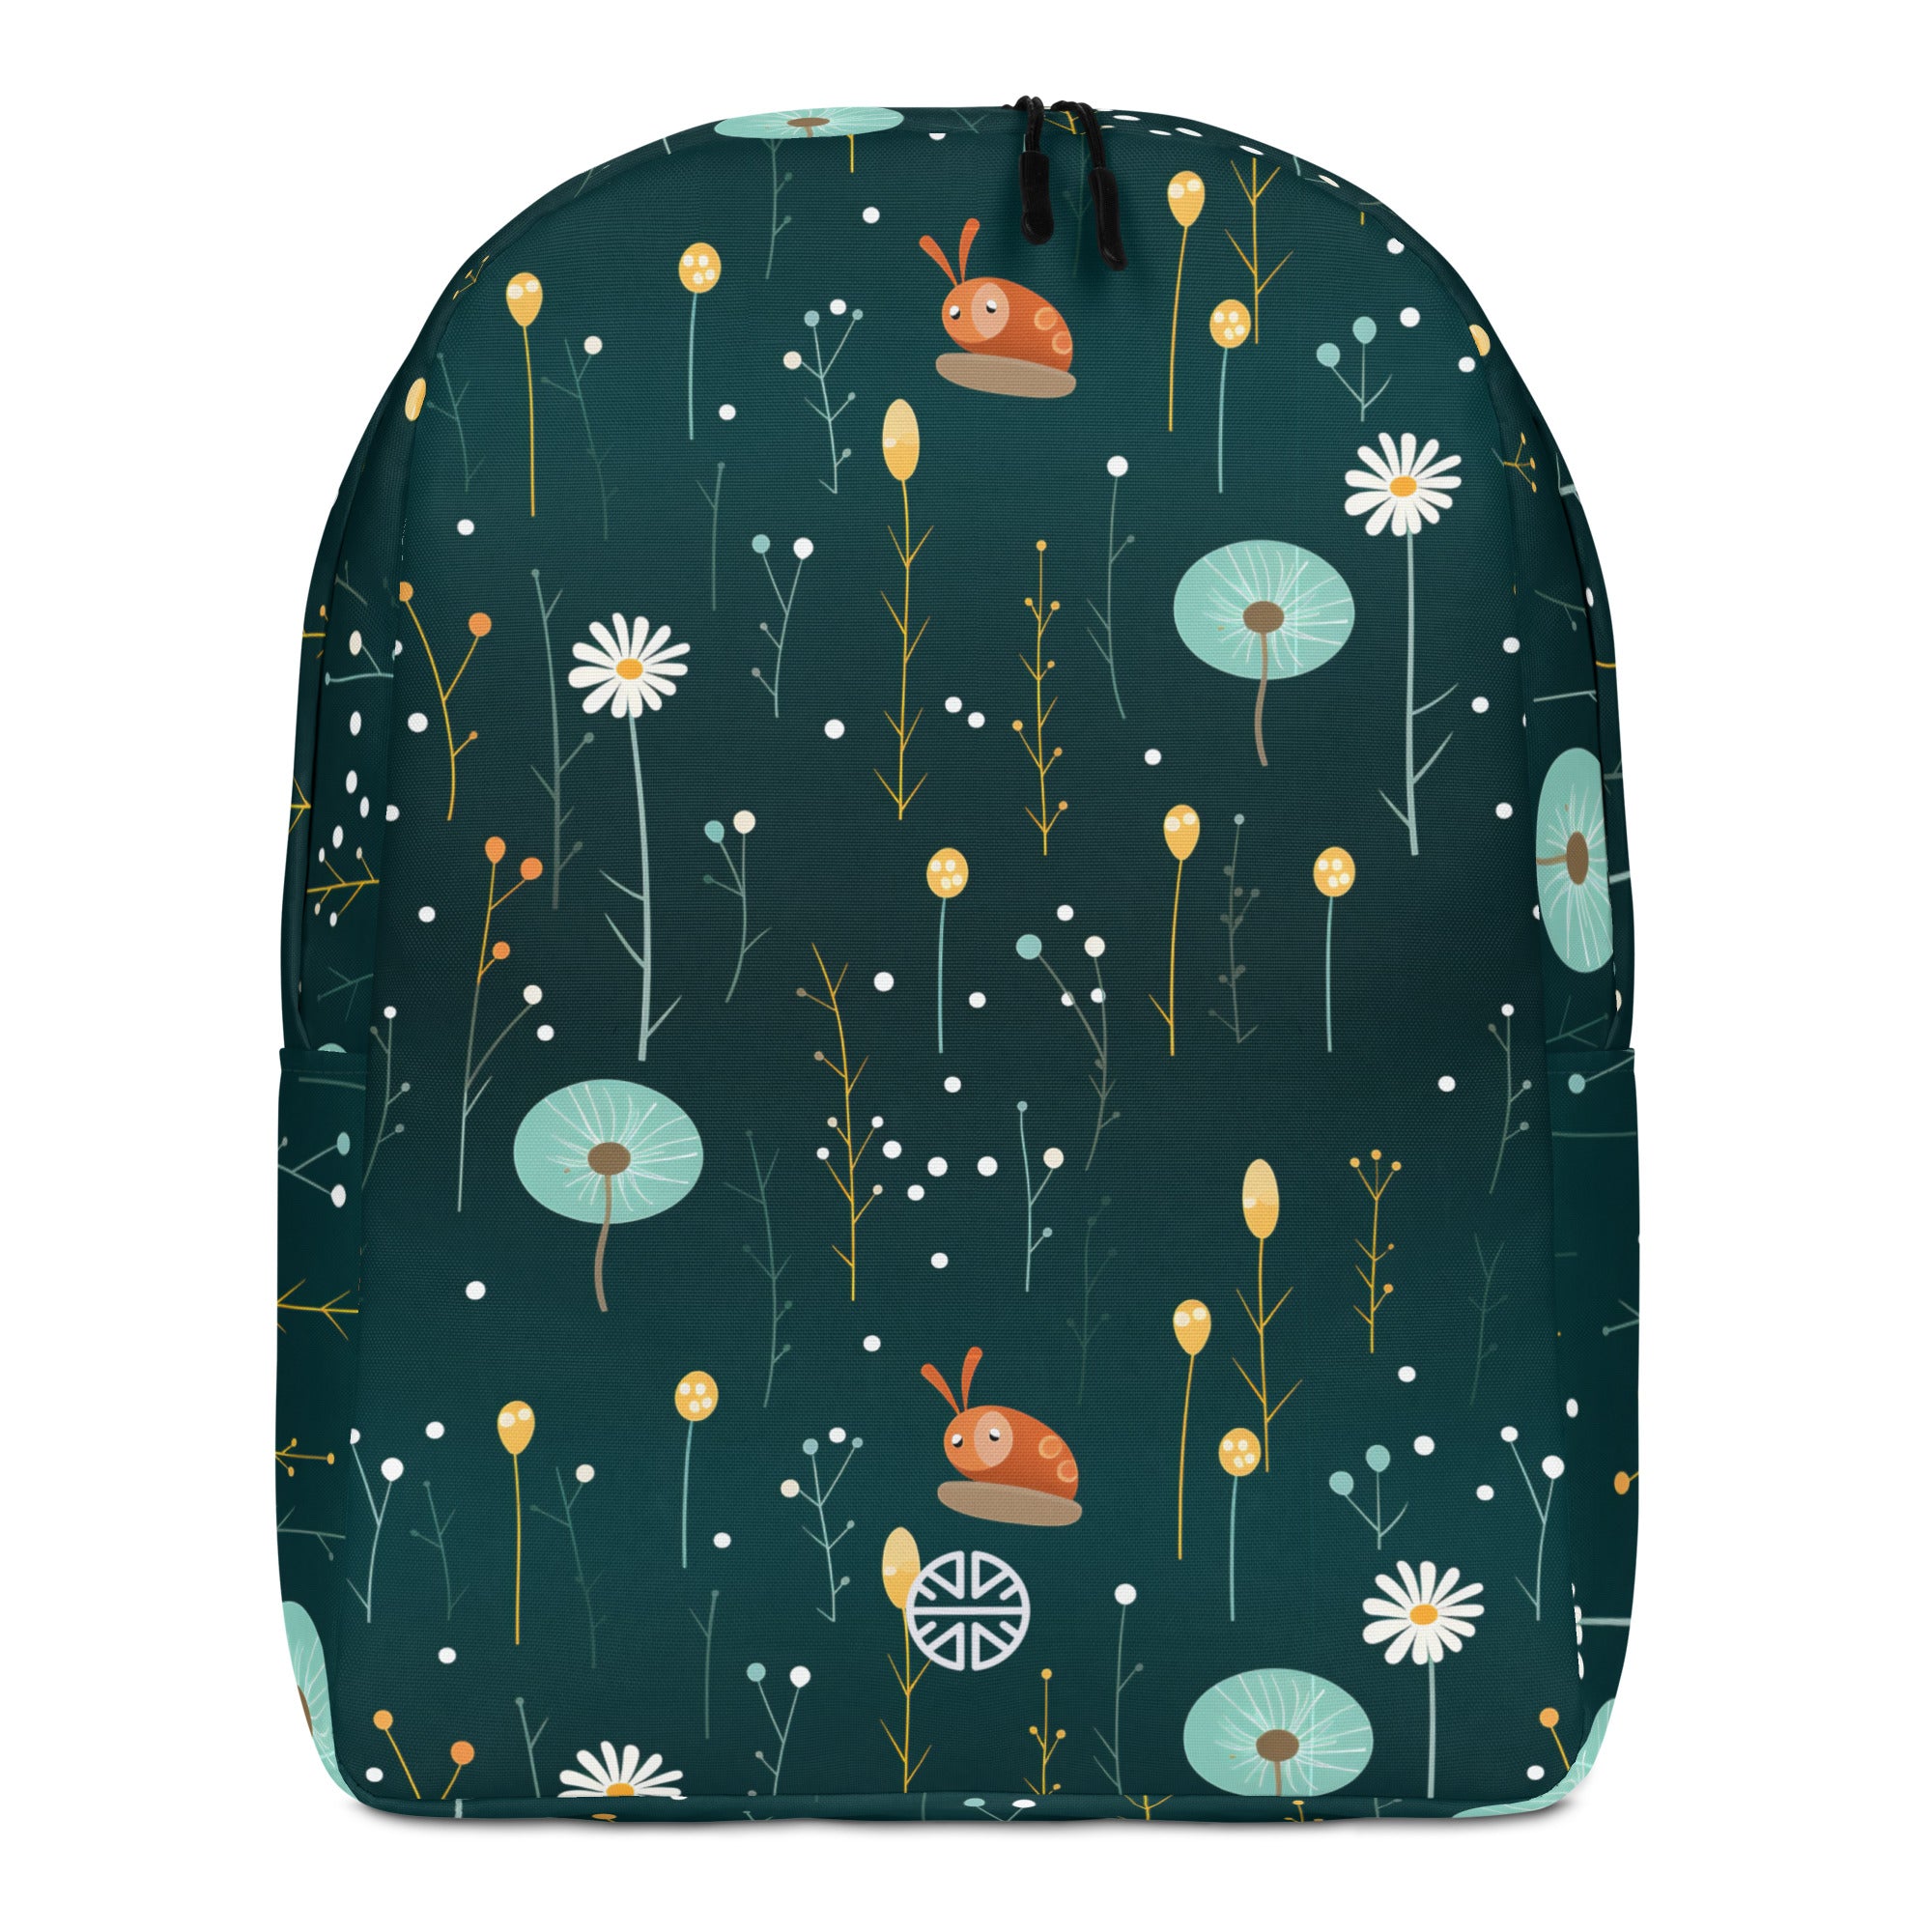 Petite & Playful Floral Snail Backpack: Your Little Elegant Adventure Buddy!